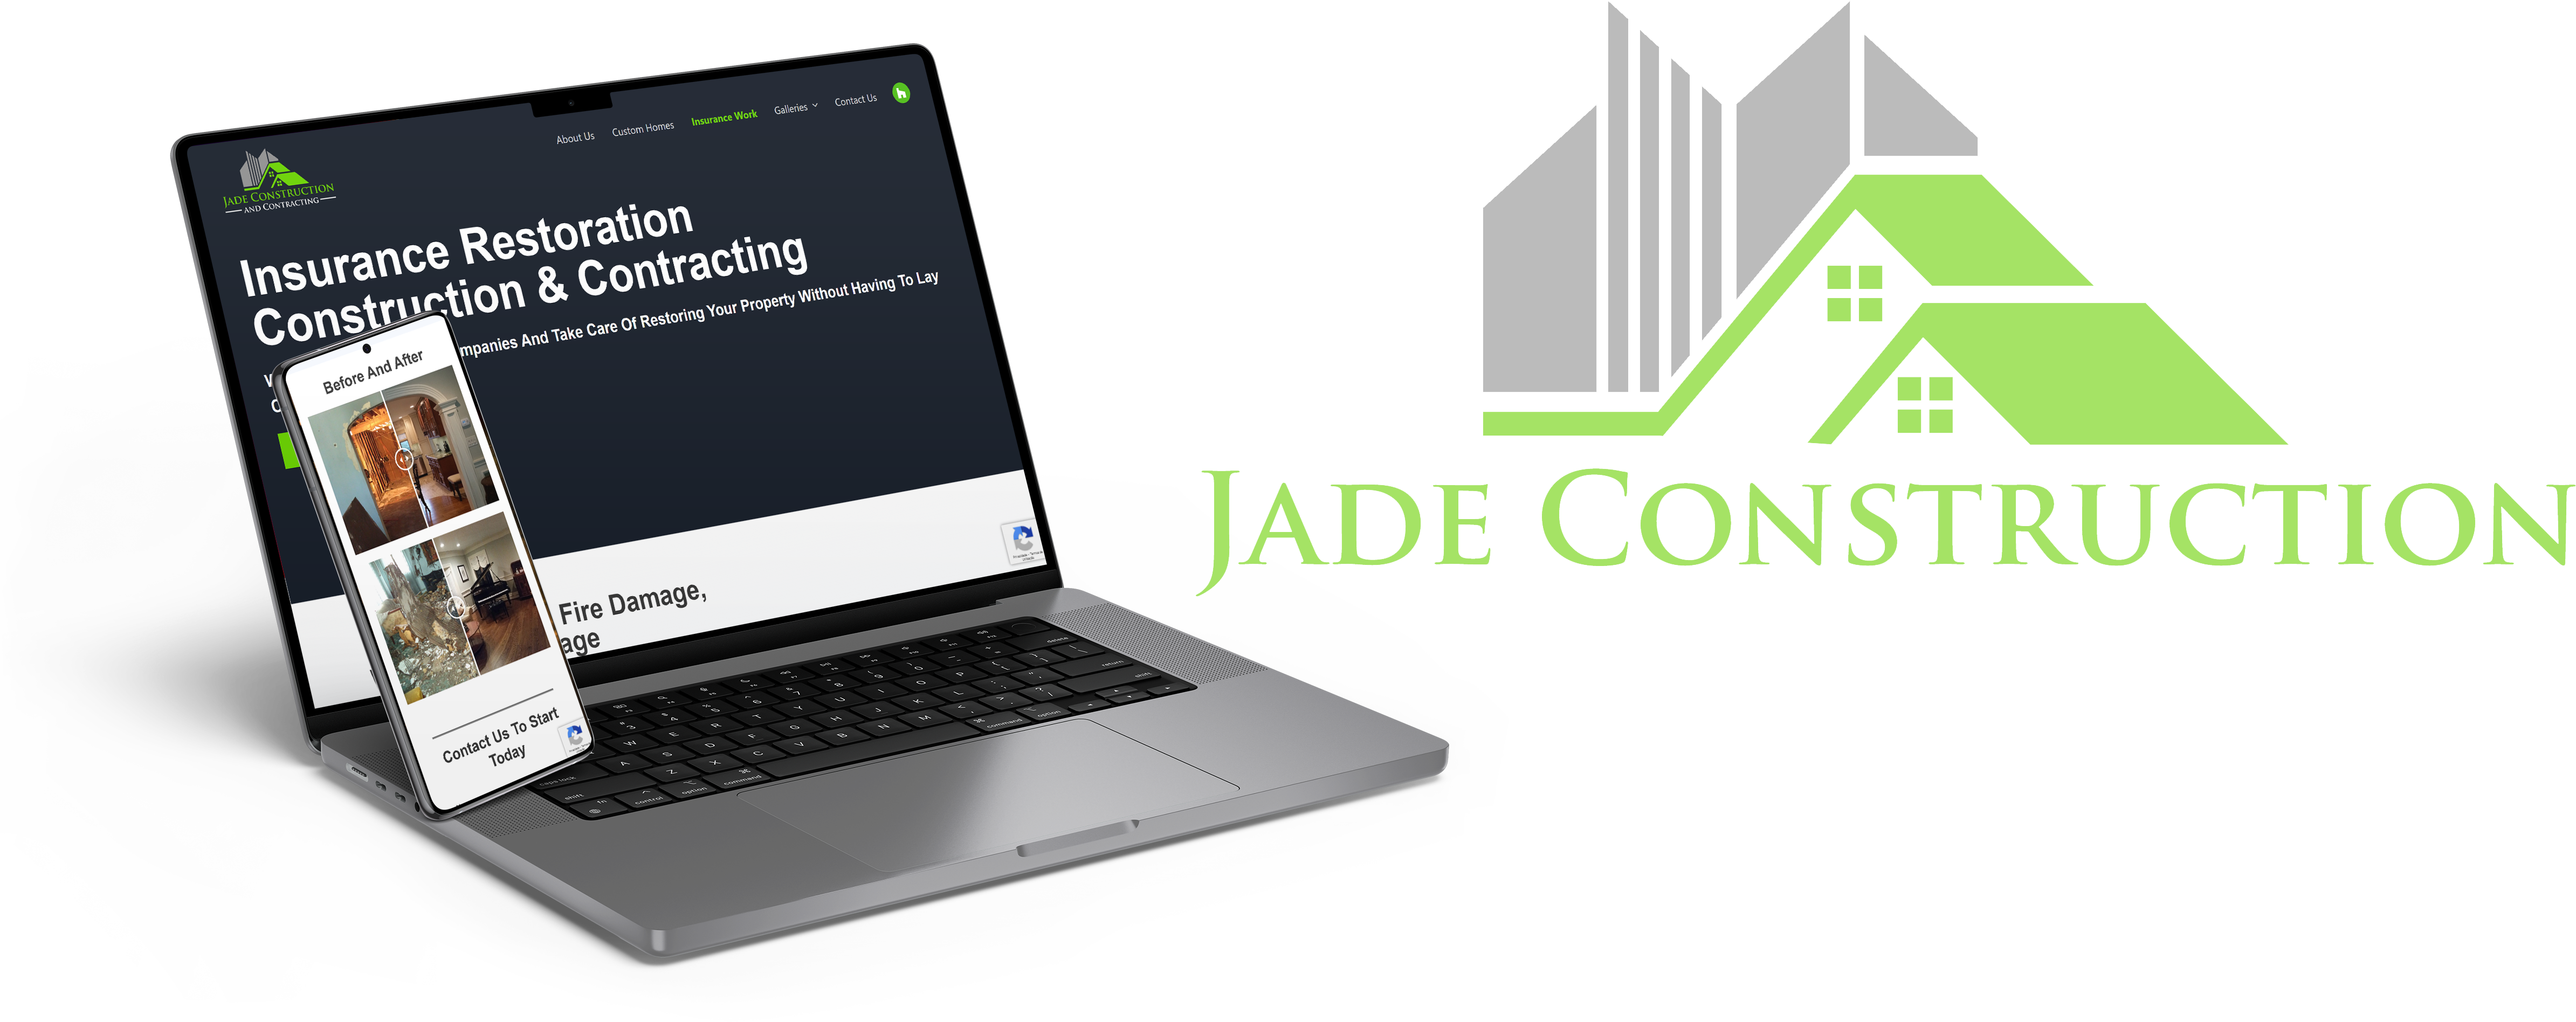 Jade Home Builder